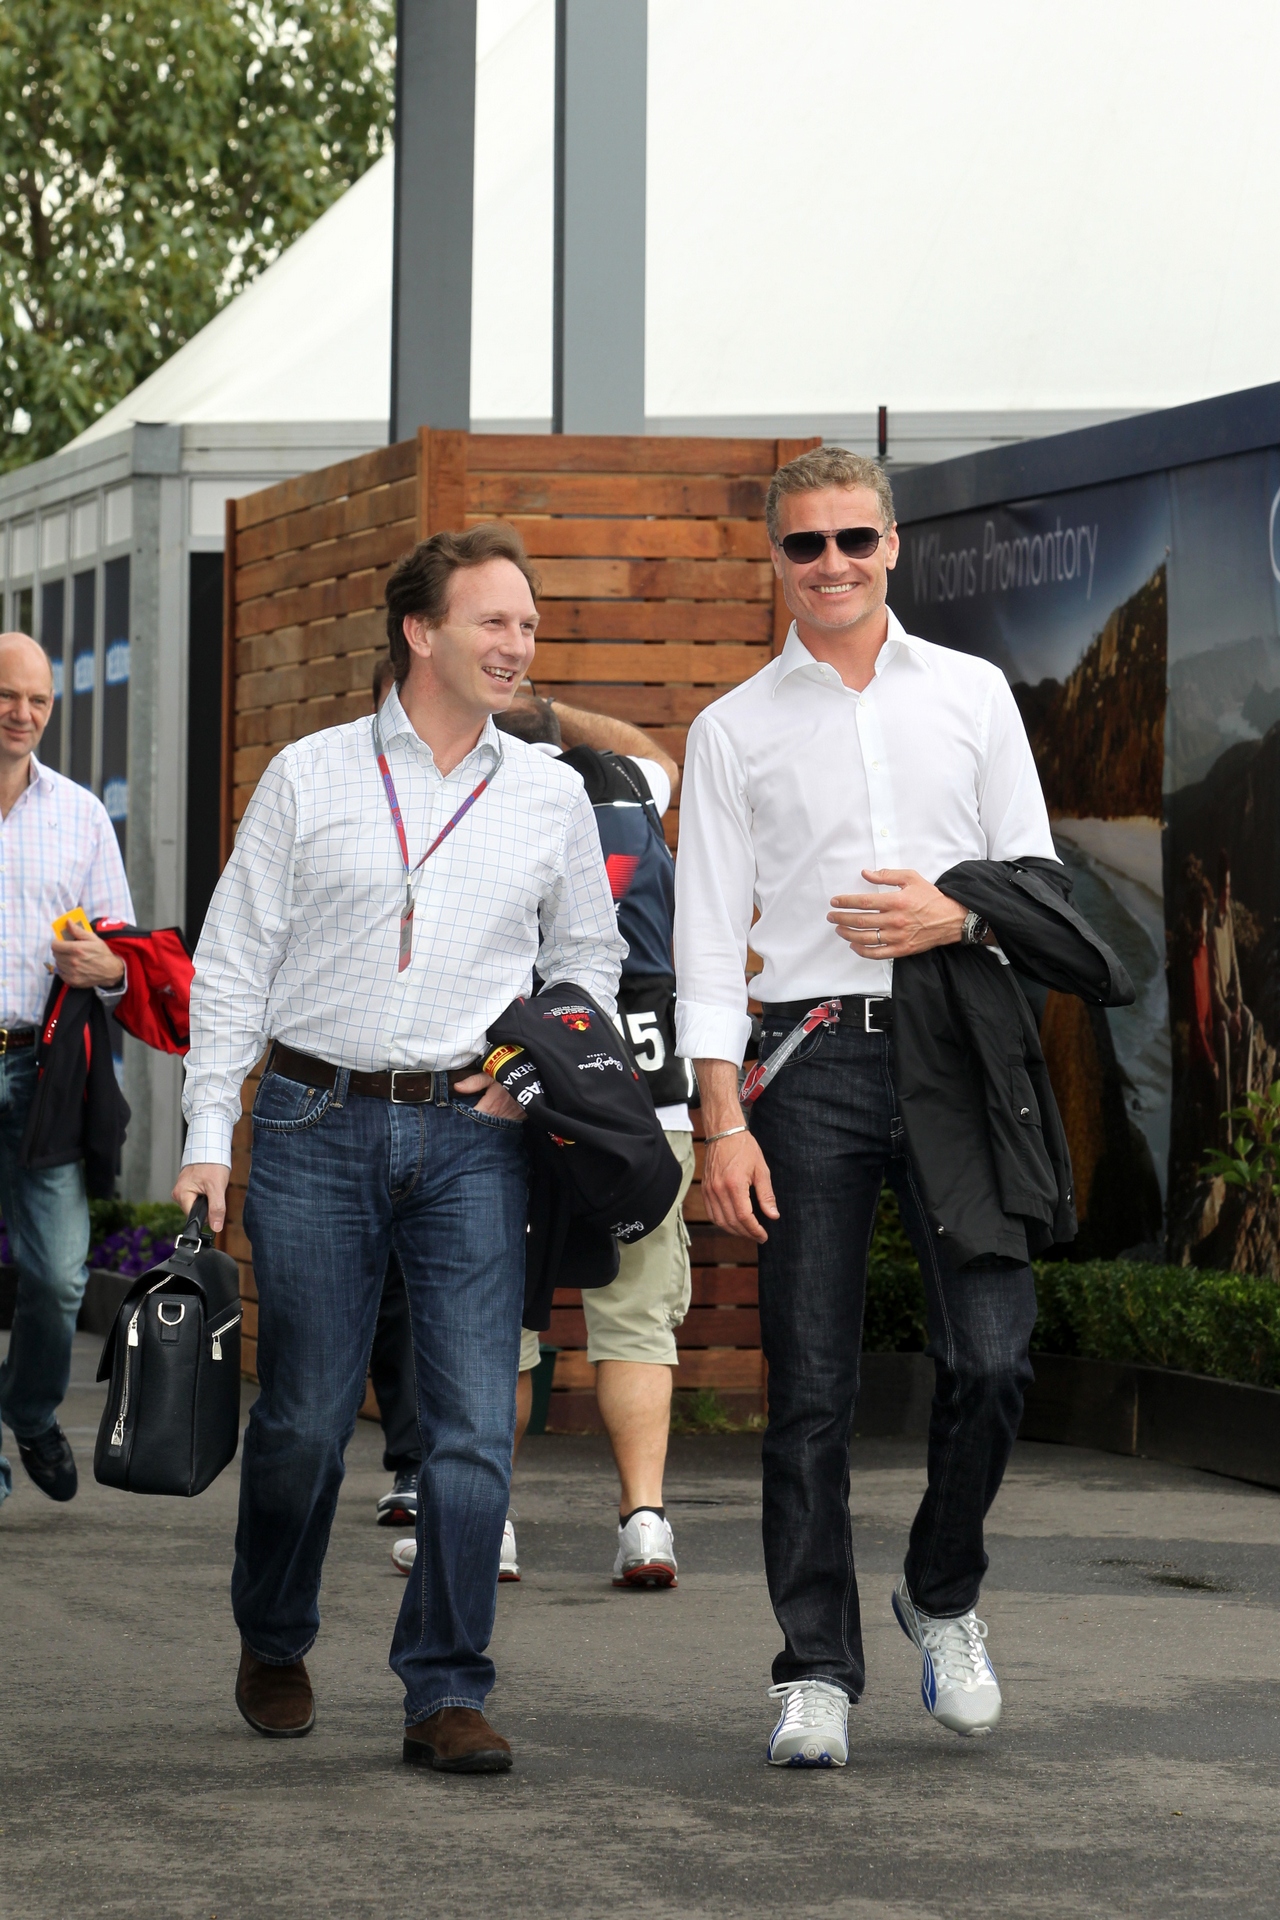 Christian Horner, Team Principal, Red Bull Racing & David Coulthard